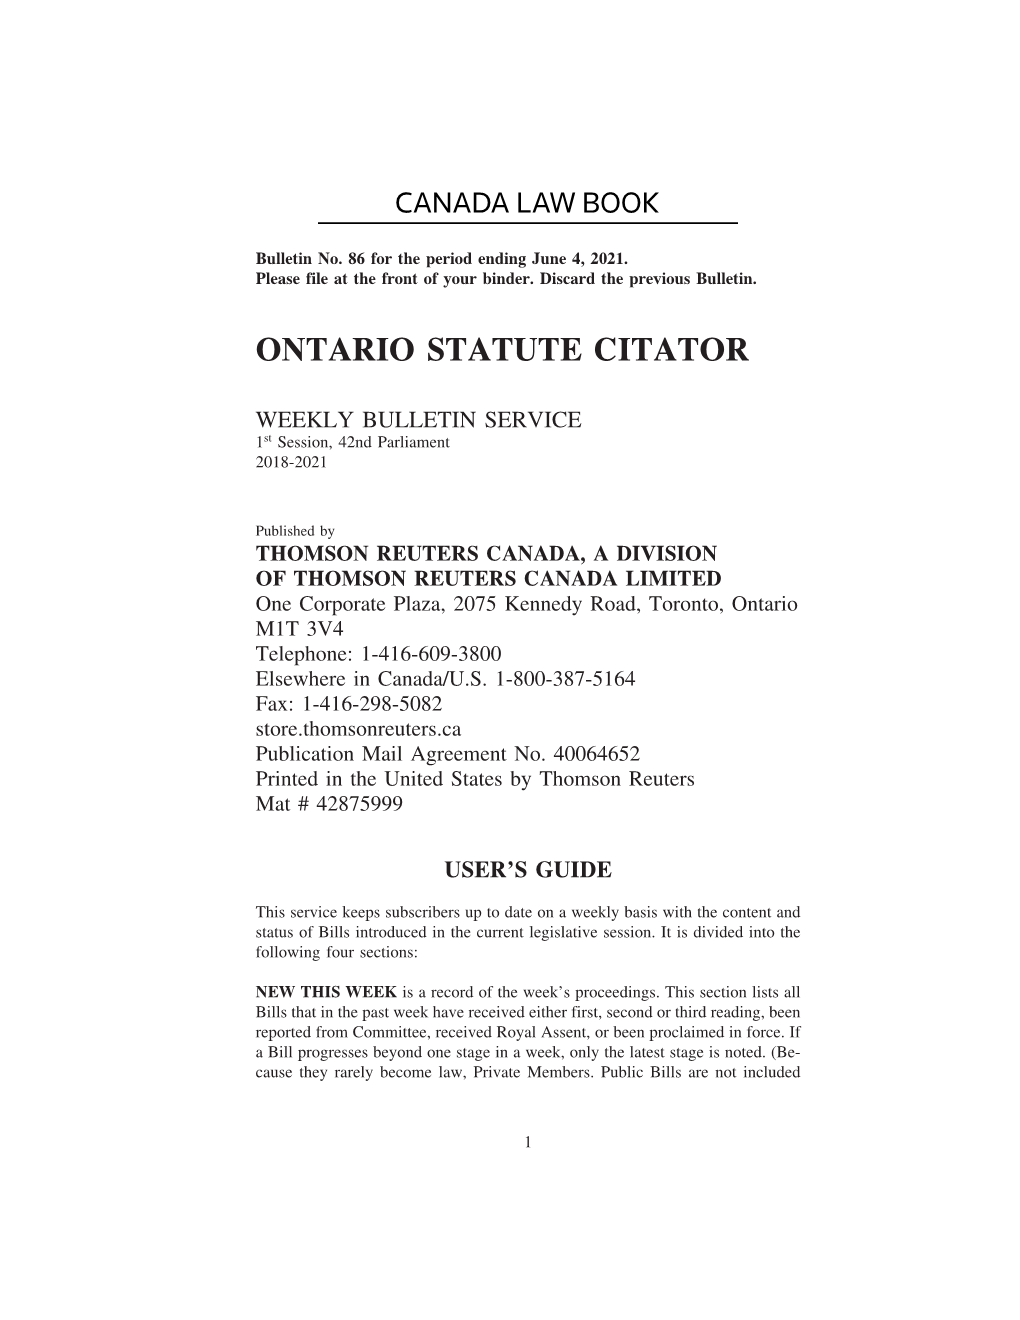 Ontario Statute Citator